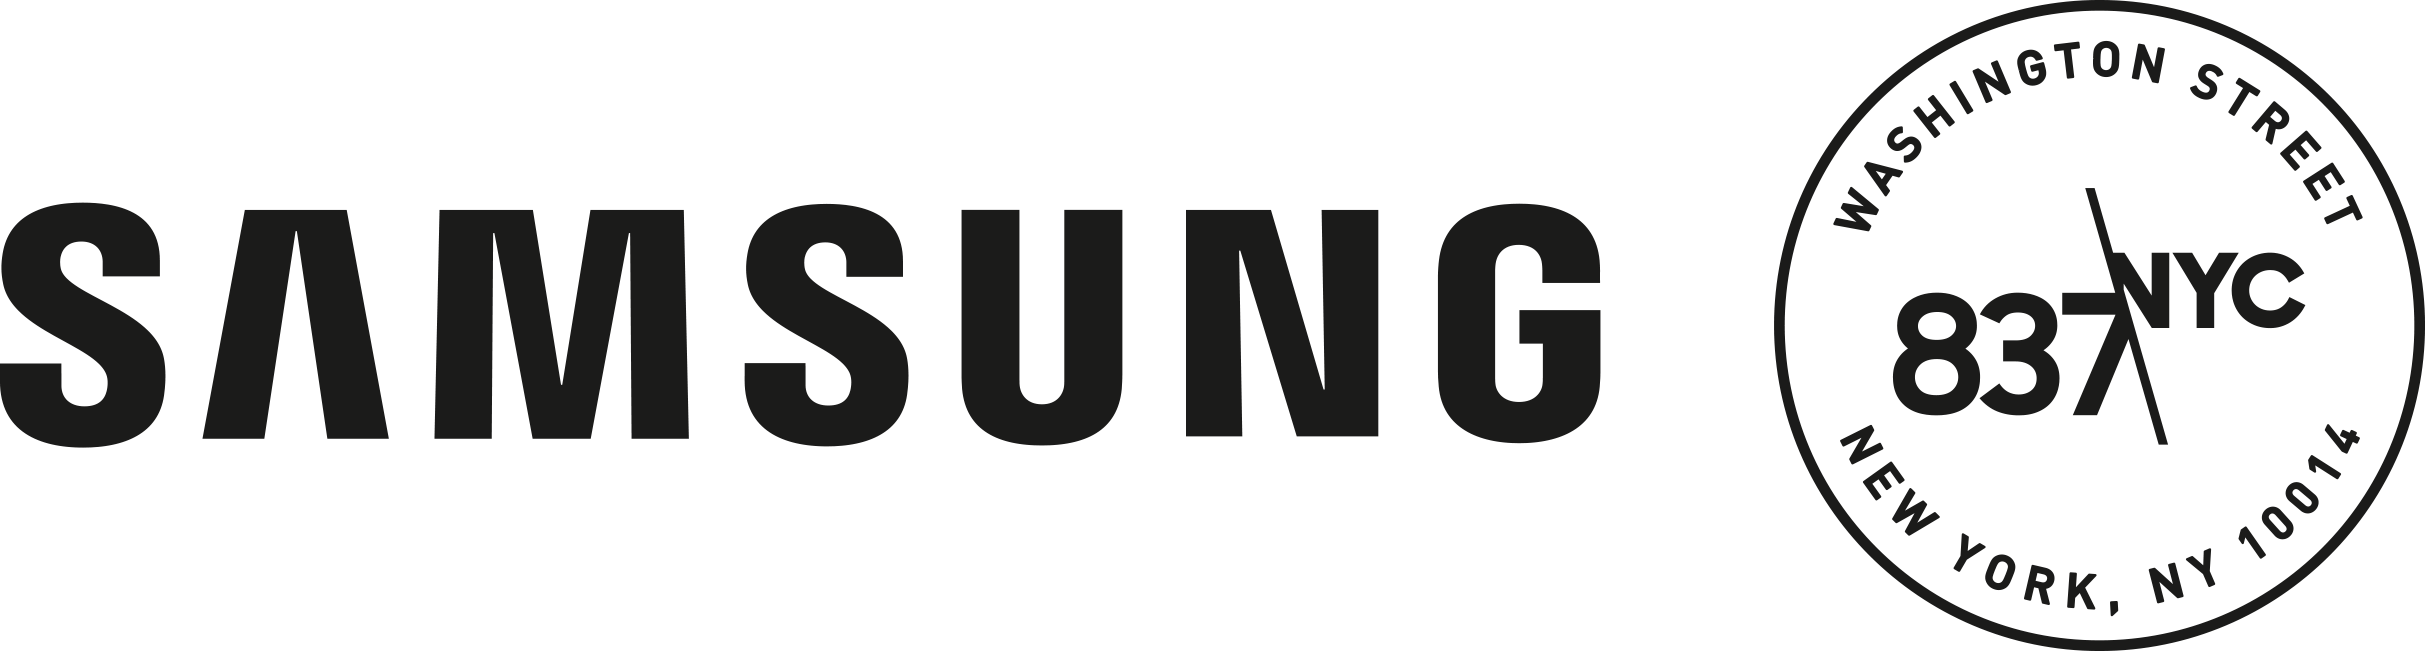 Samsung 837 logo